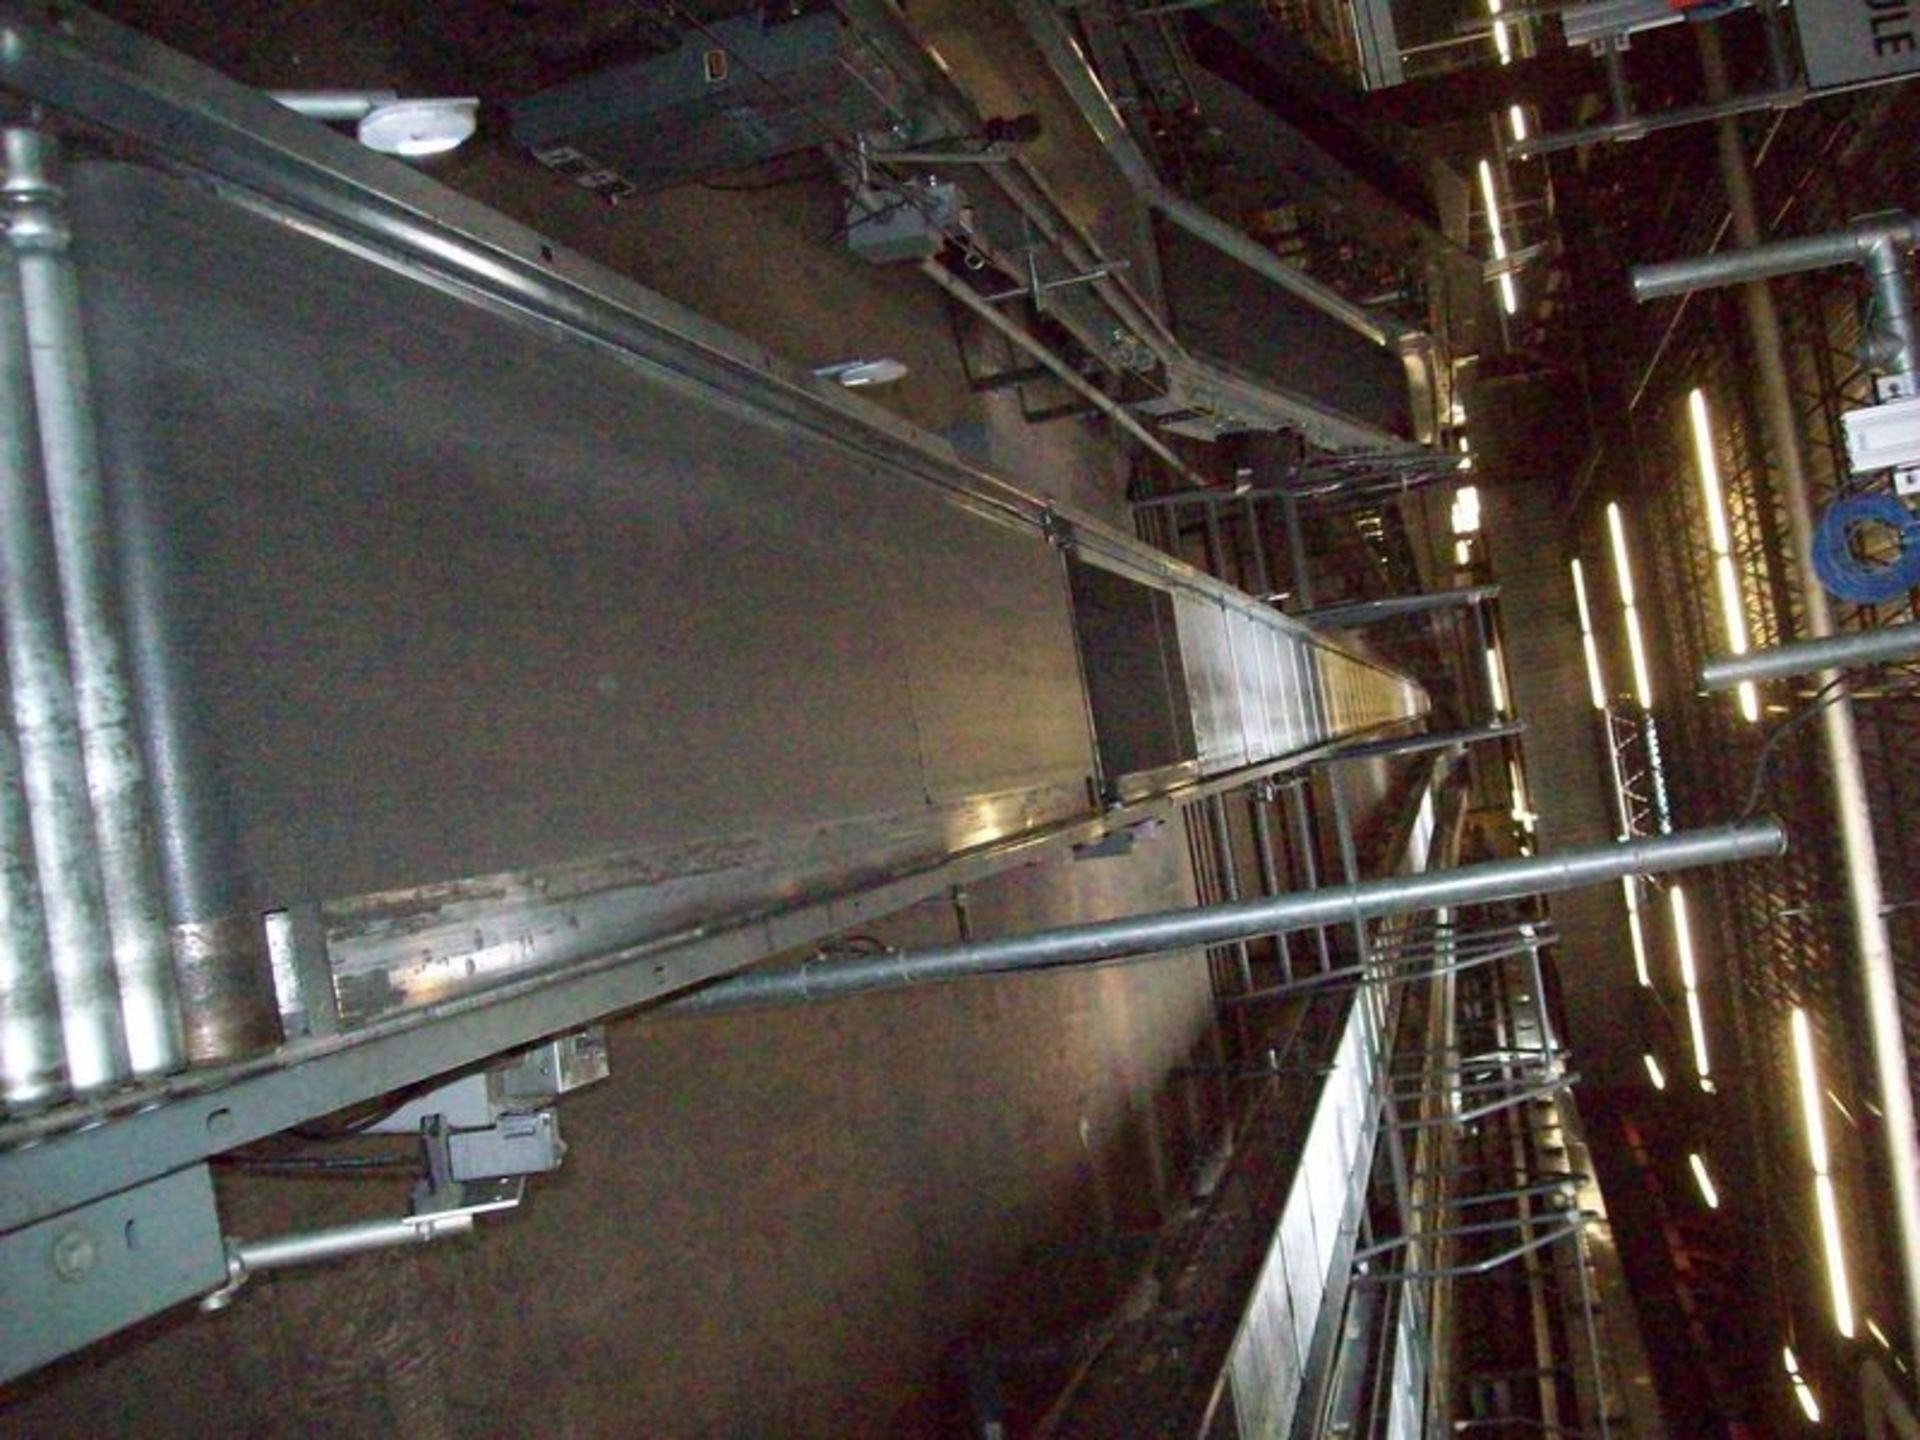 Lot of 900' +/- Buschman motorized conveyor, 24 1/2" wide with 18" belt-subject to entirety bid